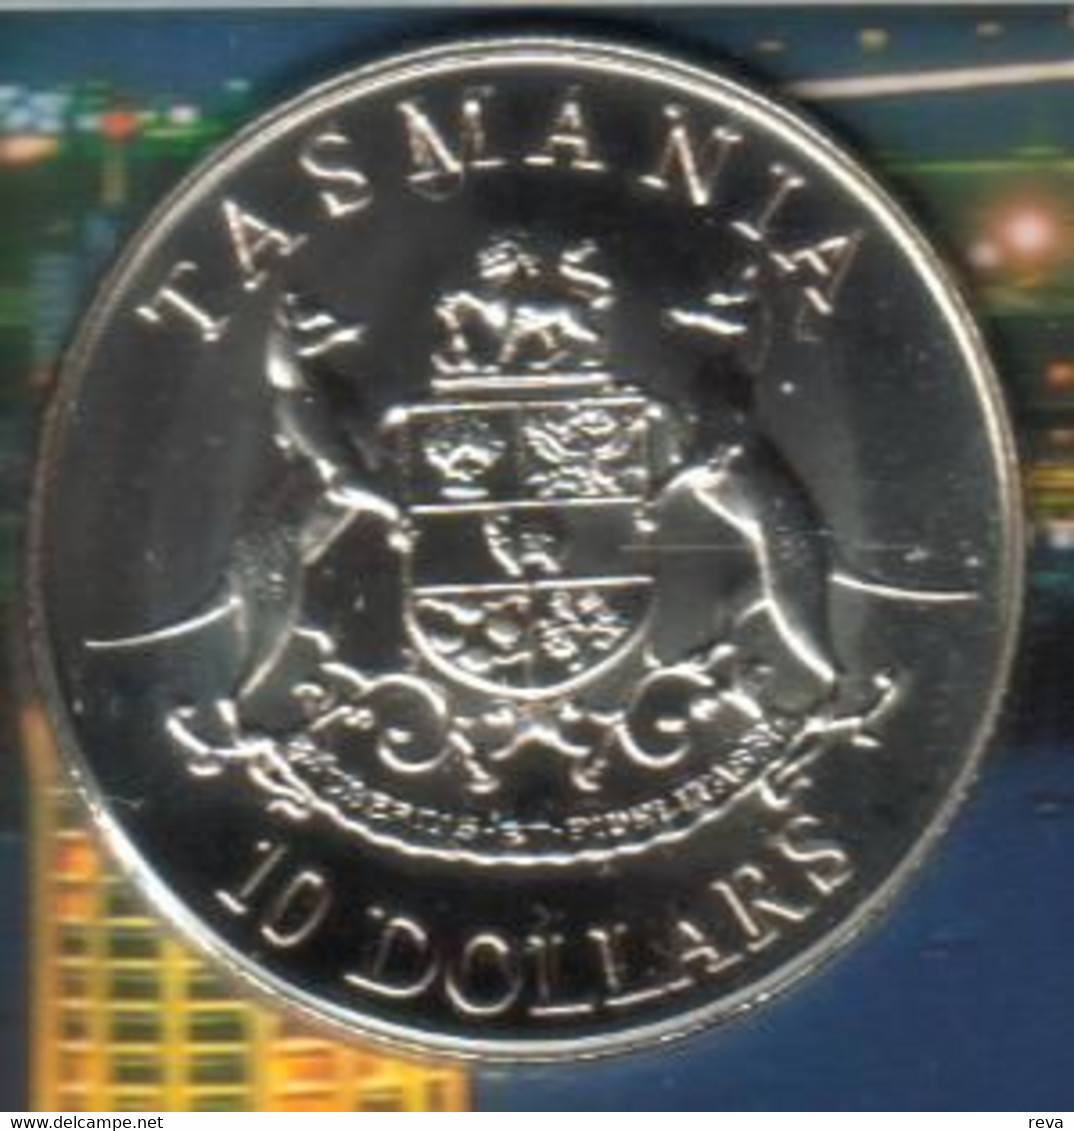 AUSTRALIA $10 STATE SERIES TASMANIA 1991 SILVER PROOF KM153 READ DESCRIPTION CAREFULLY !!! - 10 Dollars